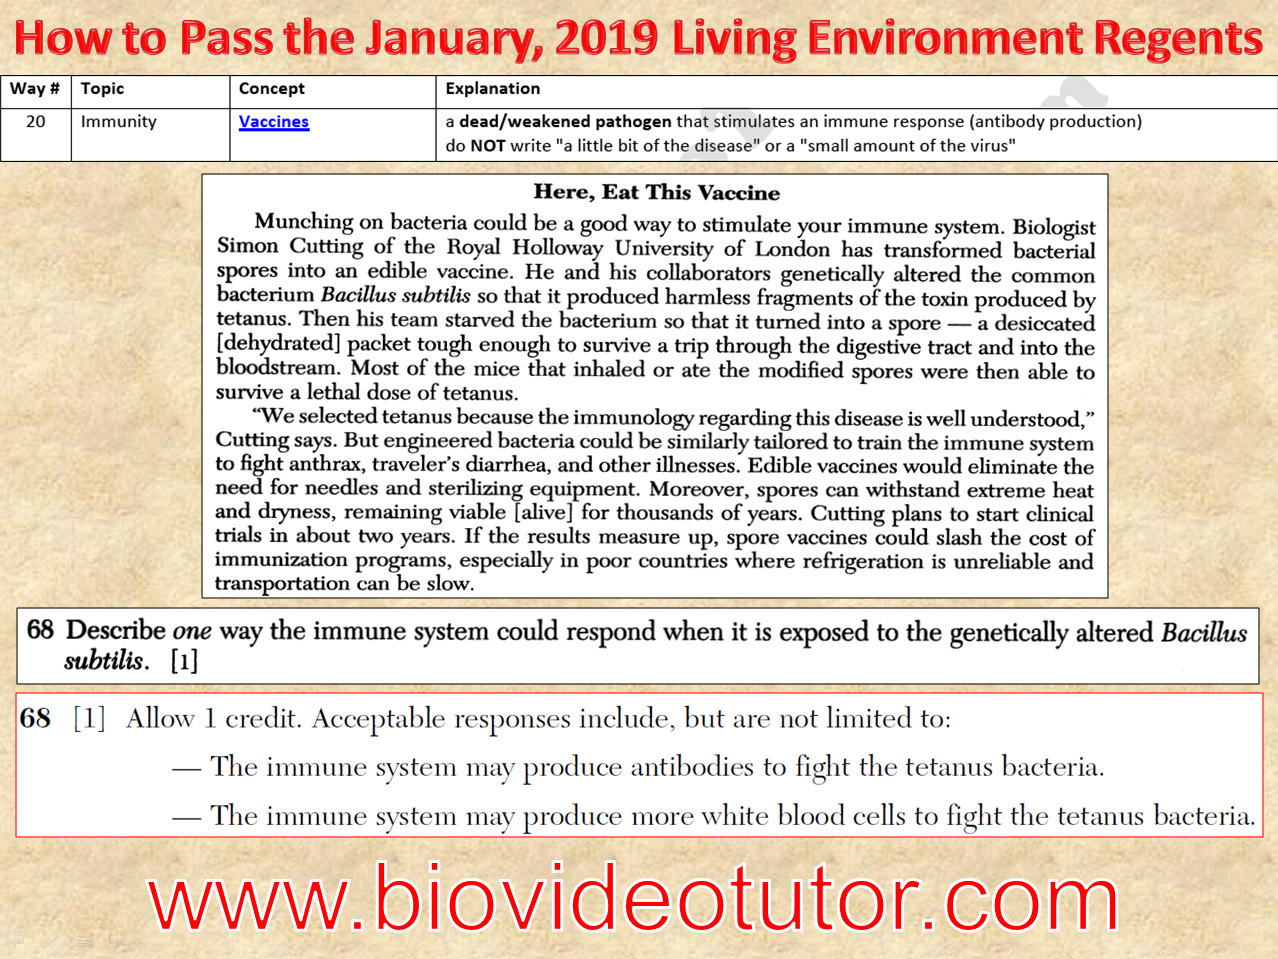 Living Environment Regents, January 2019 - Way 20